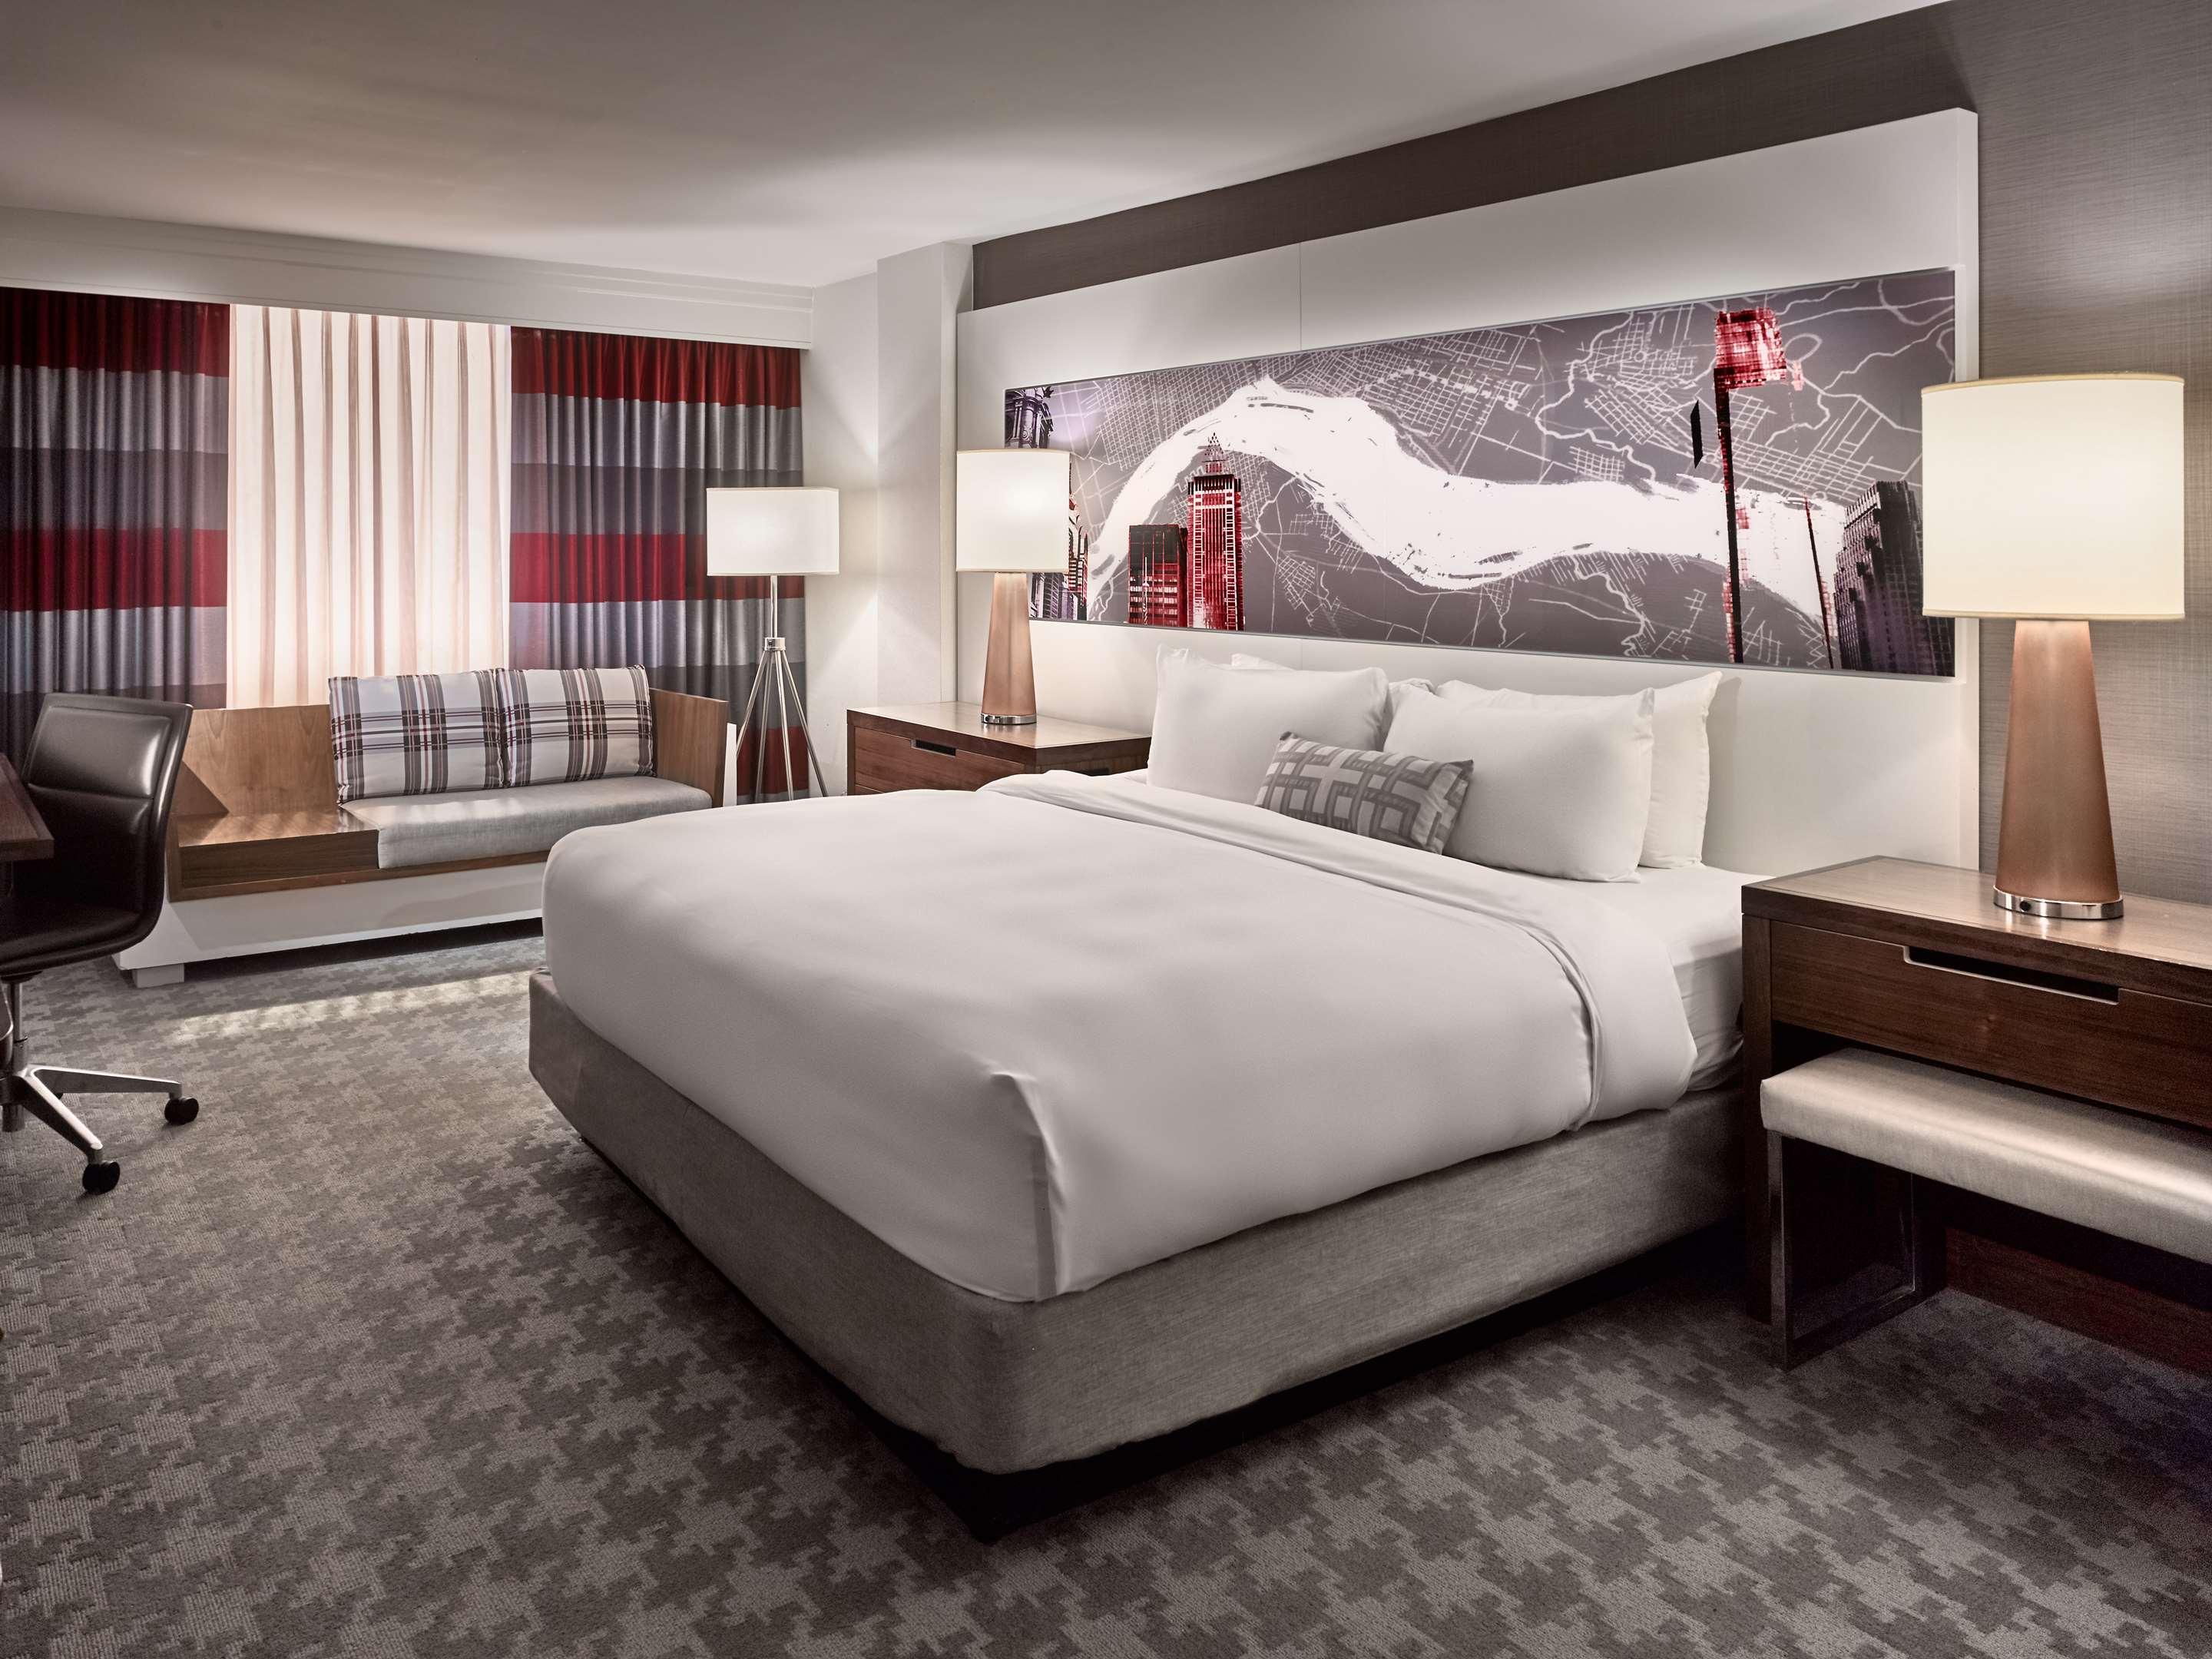 The Hotel Life: Hilton Singapore King Executive Plus Room Reivew